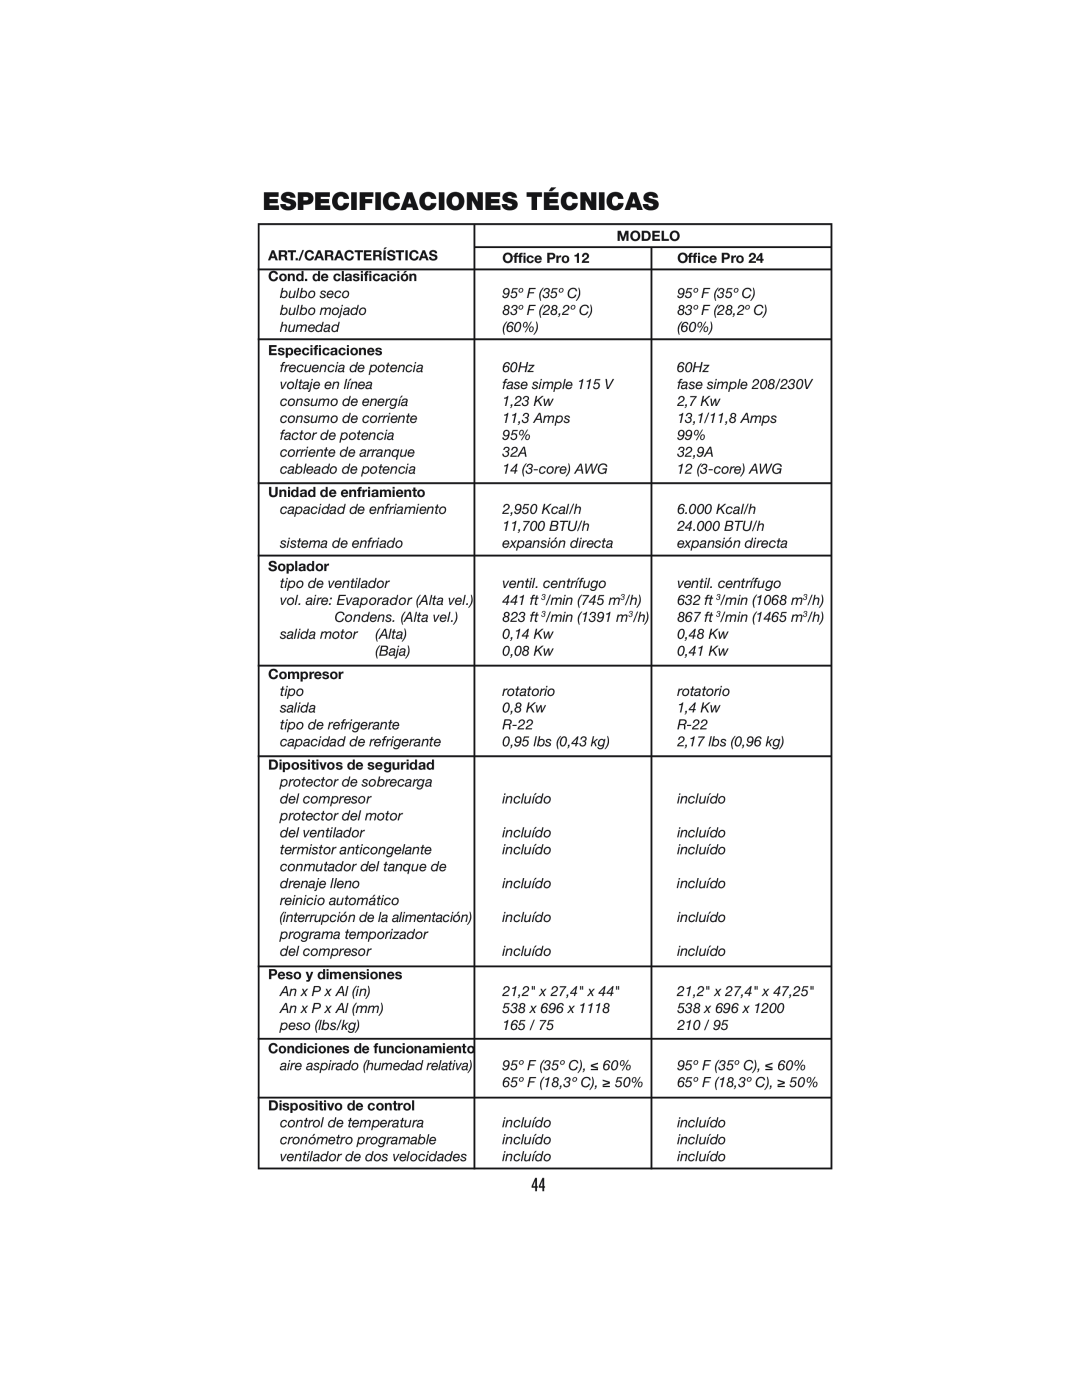 Denso OFFICE PRO 12, OFFICE PRO 24 operation manual Especificaciones Técnicas 